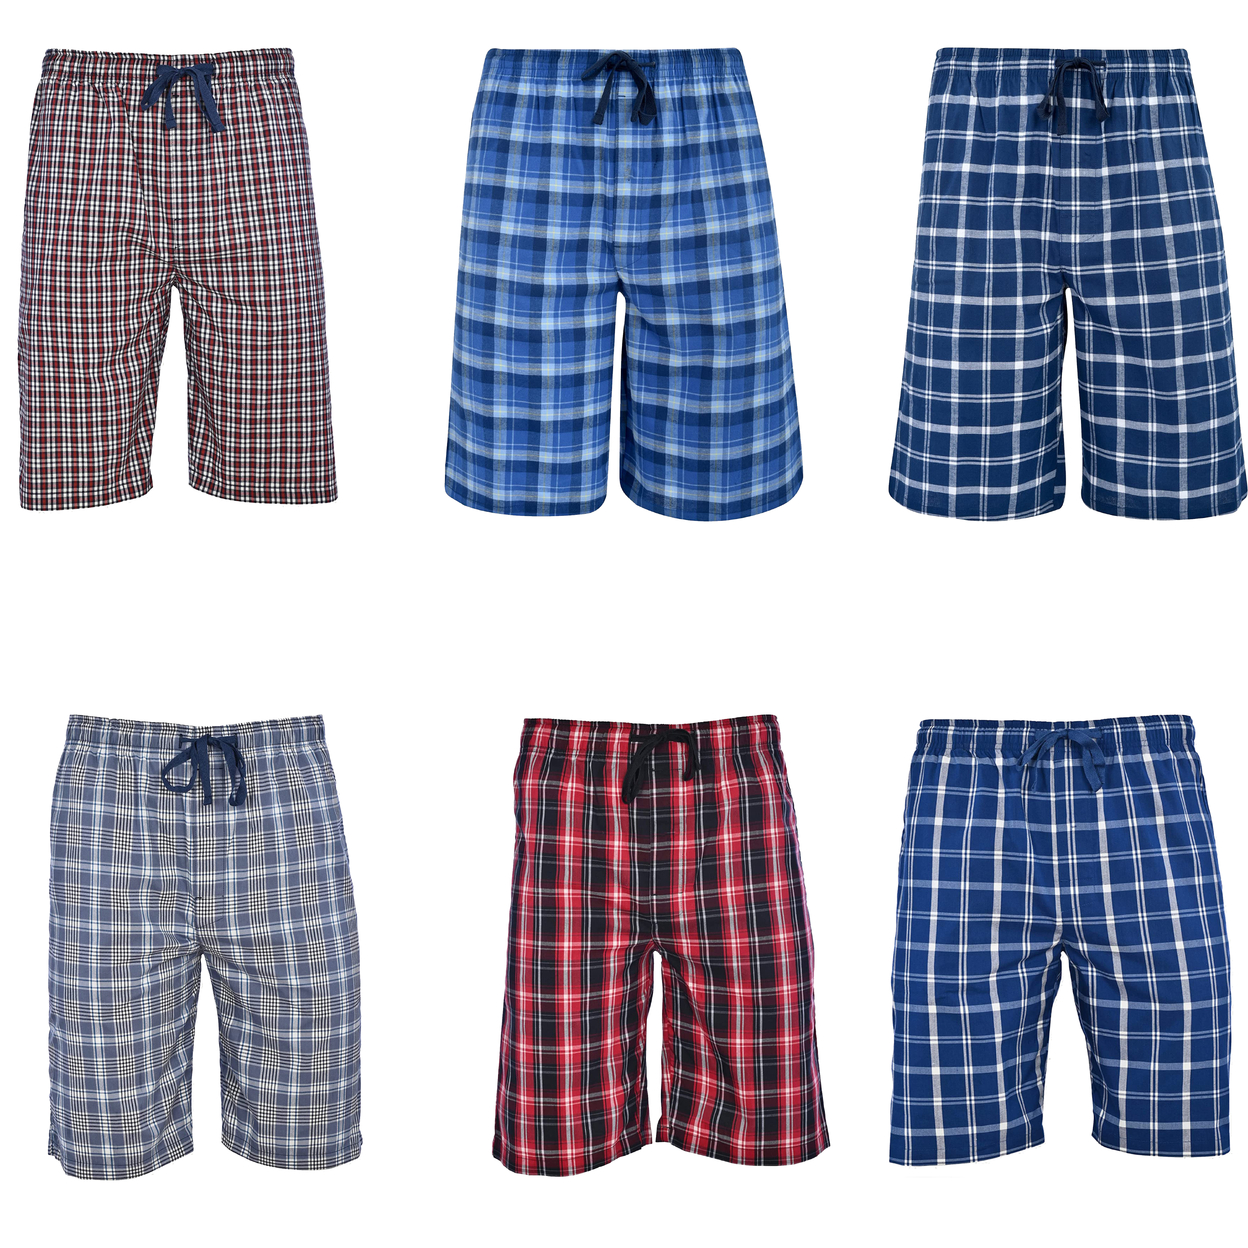 Men's Ultra-Soft Plaid Lounge Pajama Sleep Wear Shorts - Black, Medium